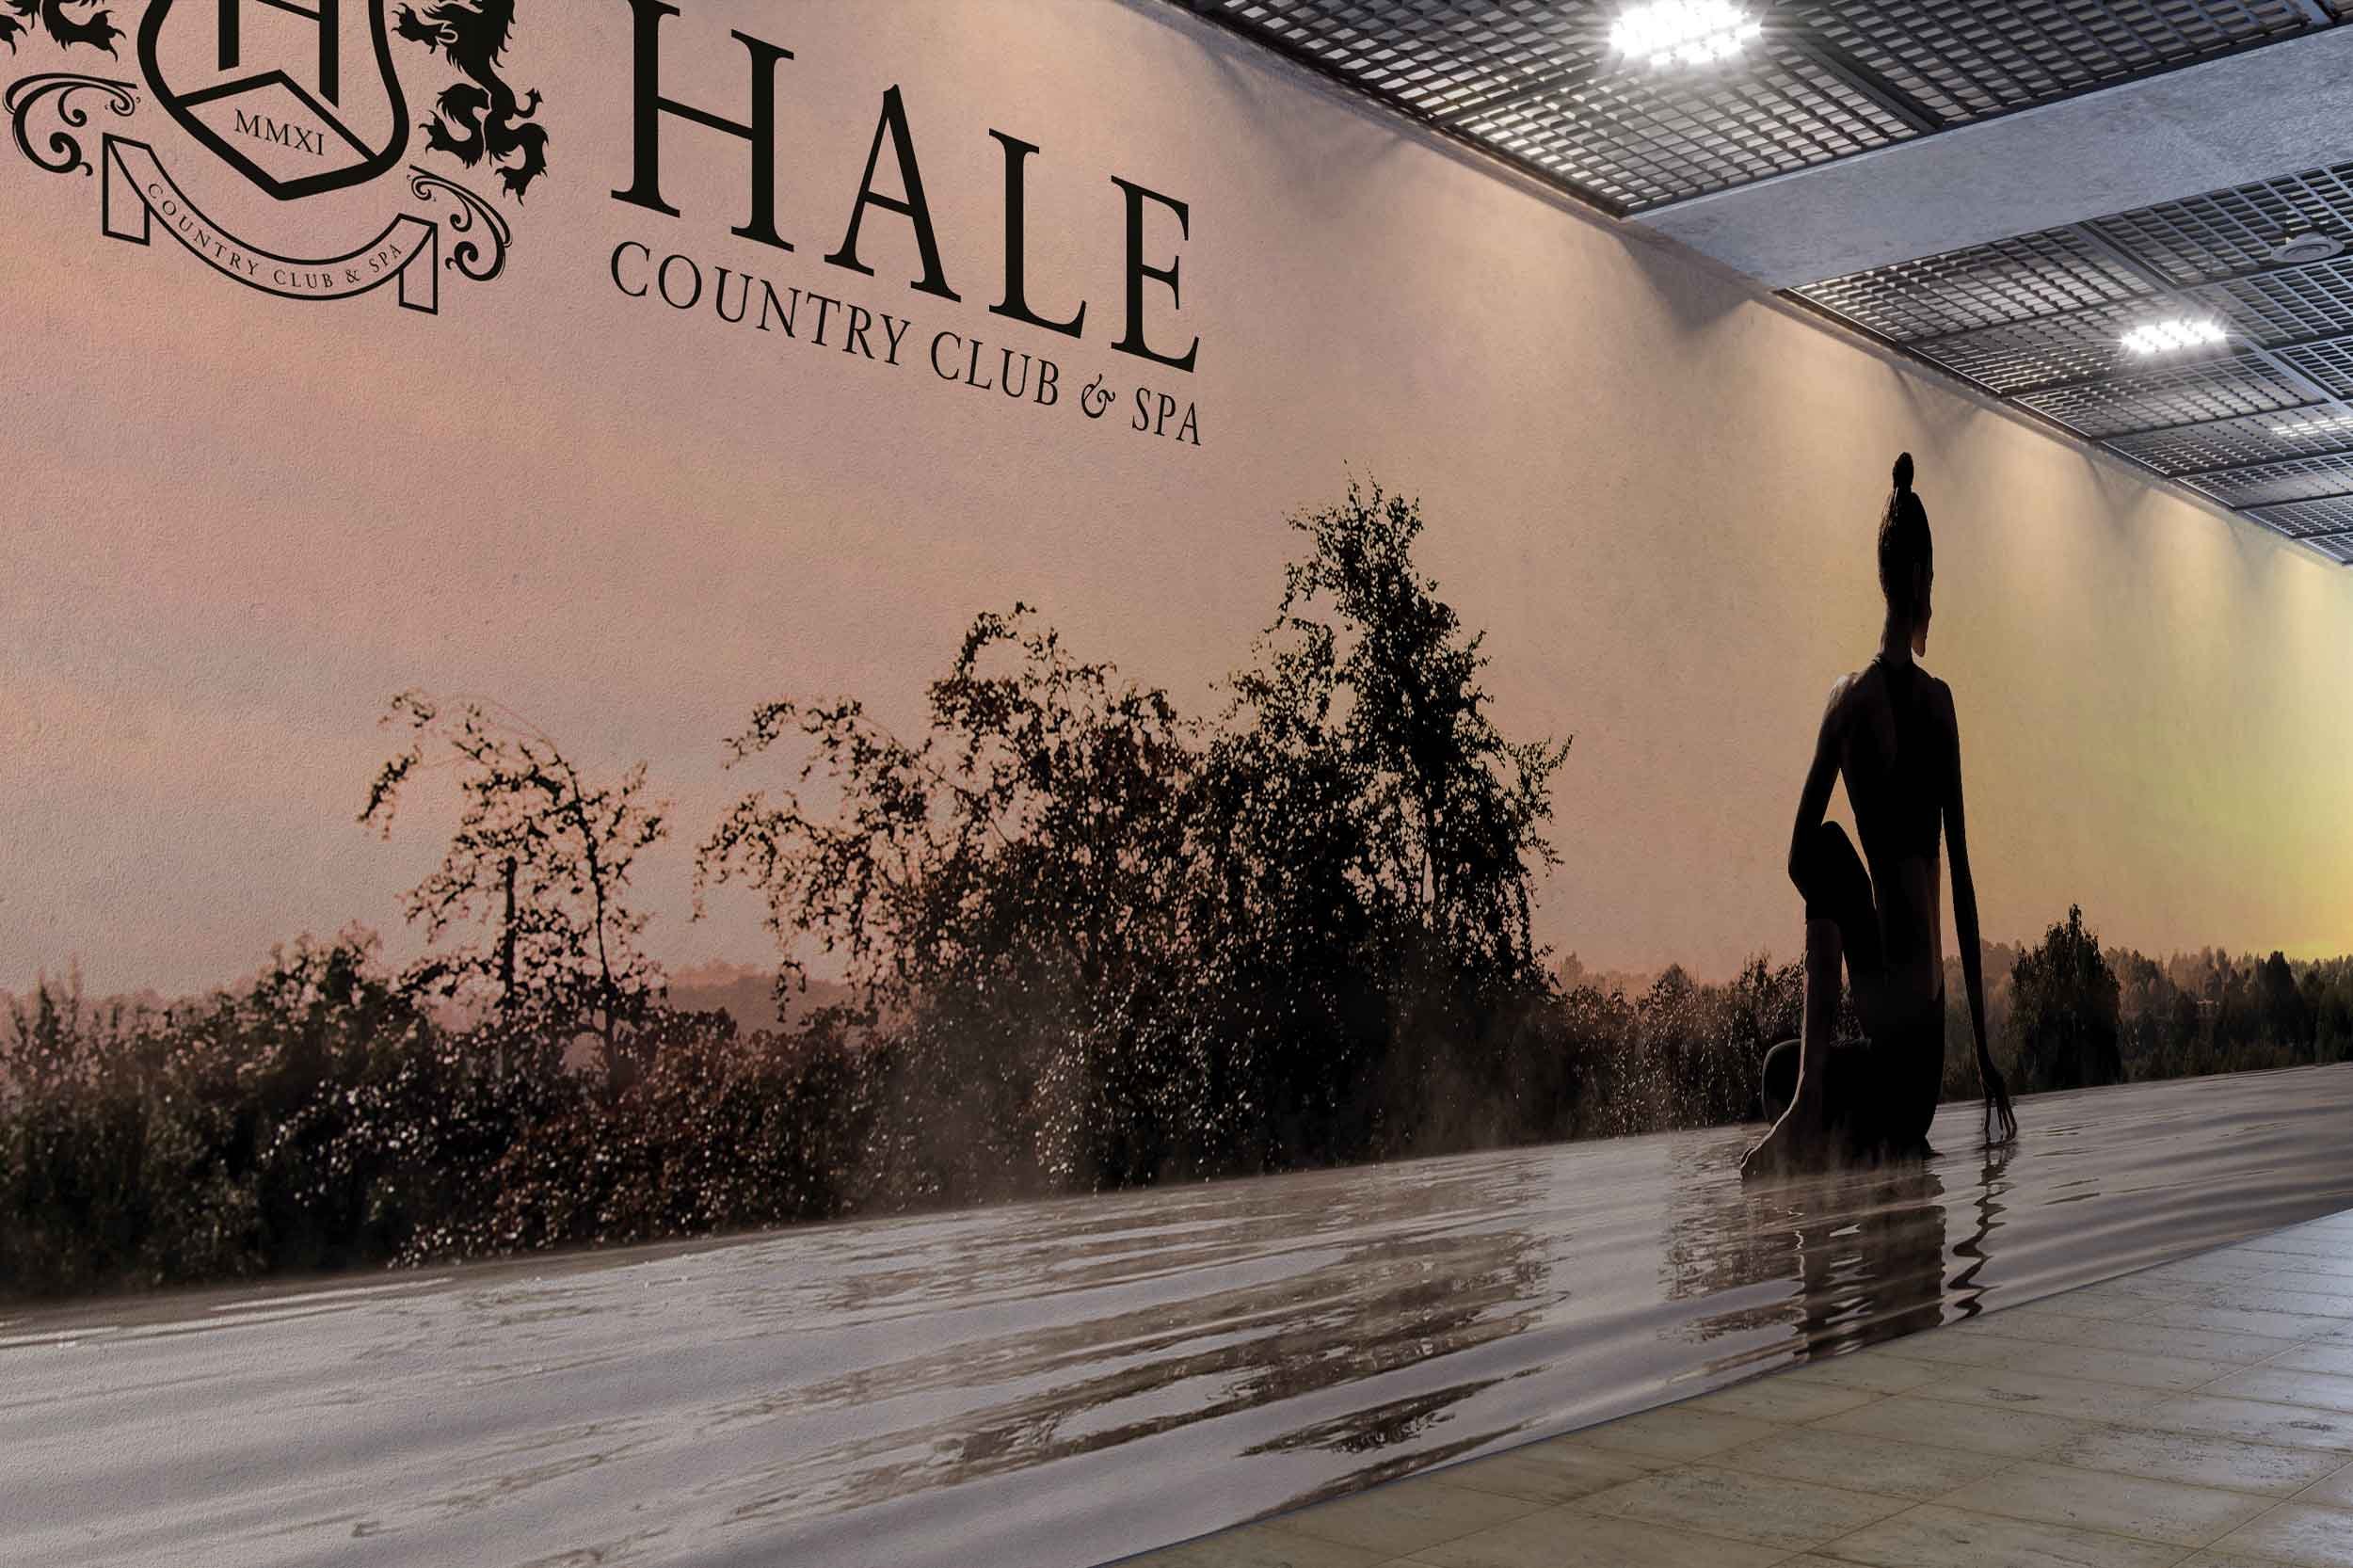 hale_country_club-hospitality_leisure-photography-lifestyle-wall_design_hale-tim_marner_branding_agency_bolton.jpg